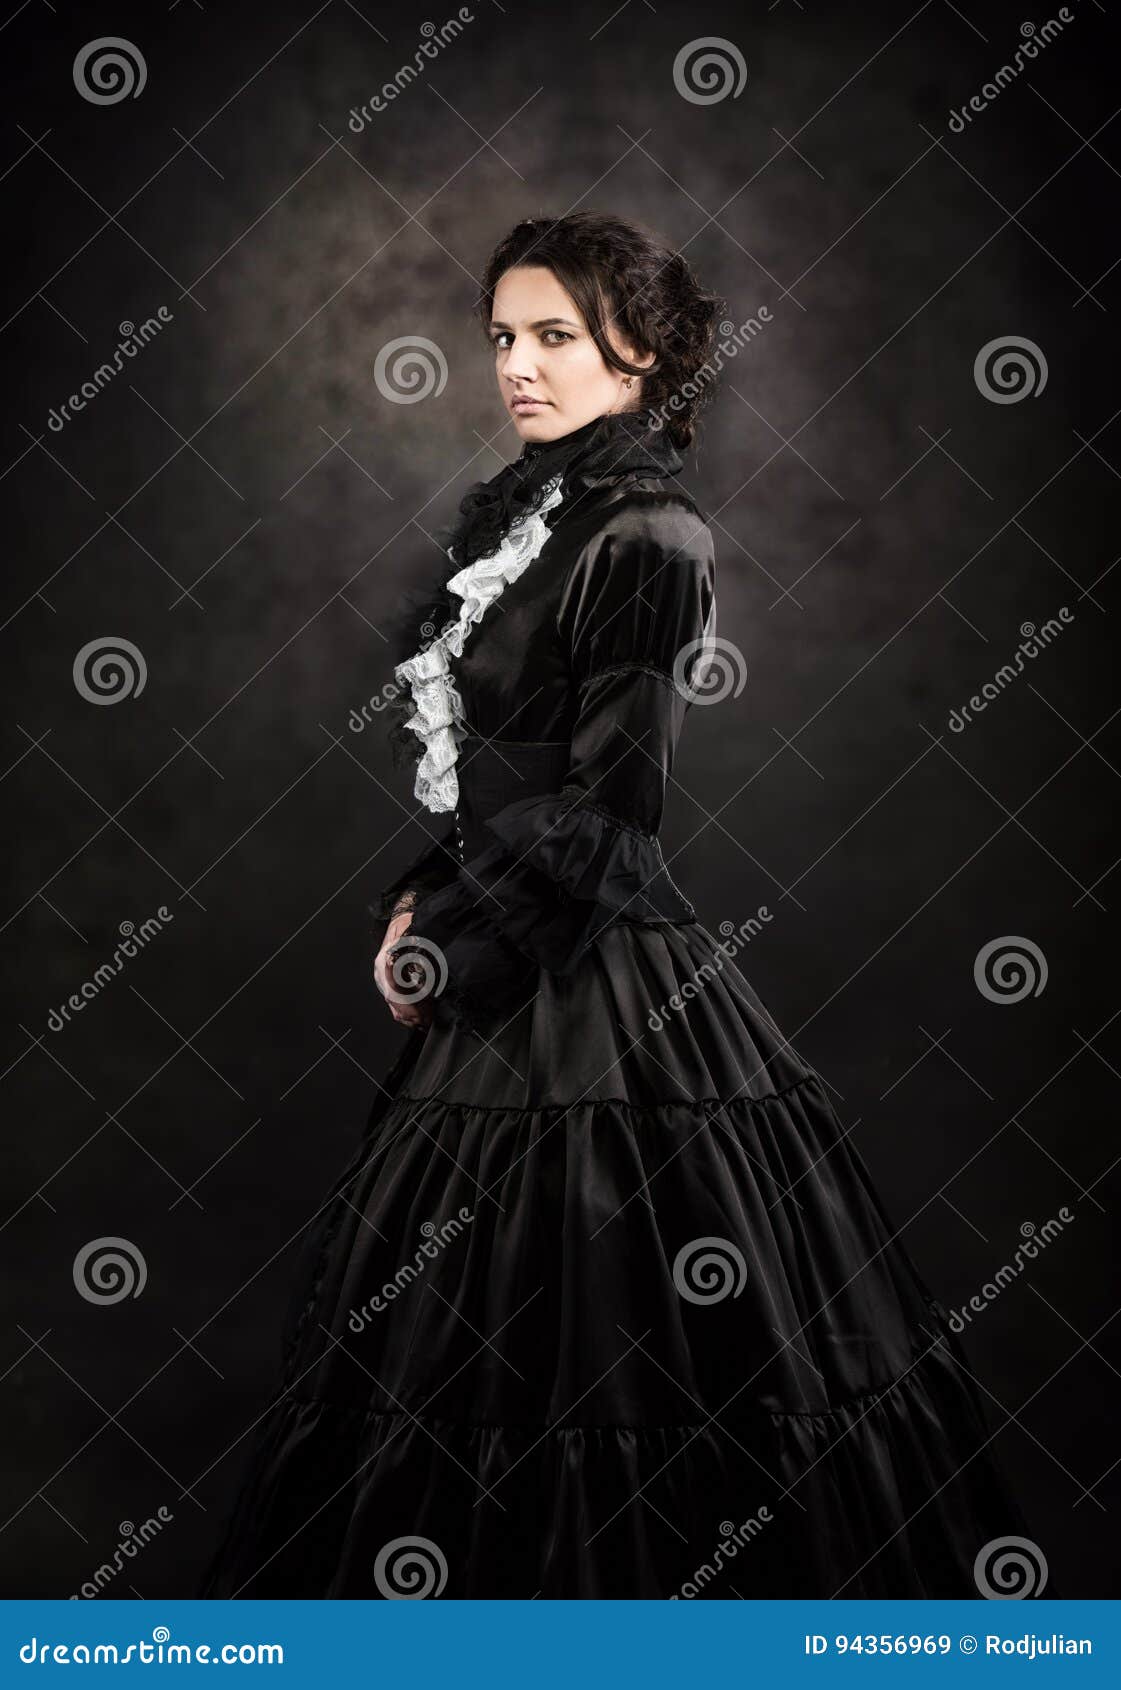 stylized portrait of a victorian lady in black